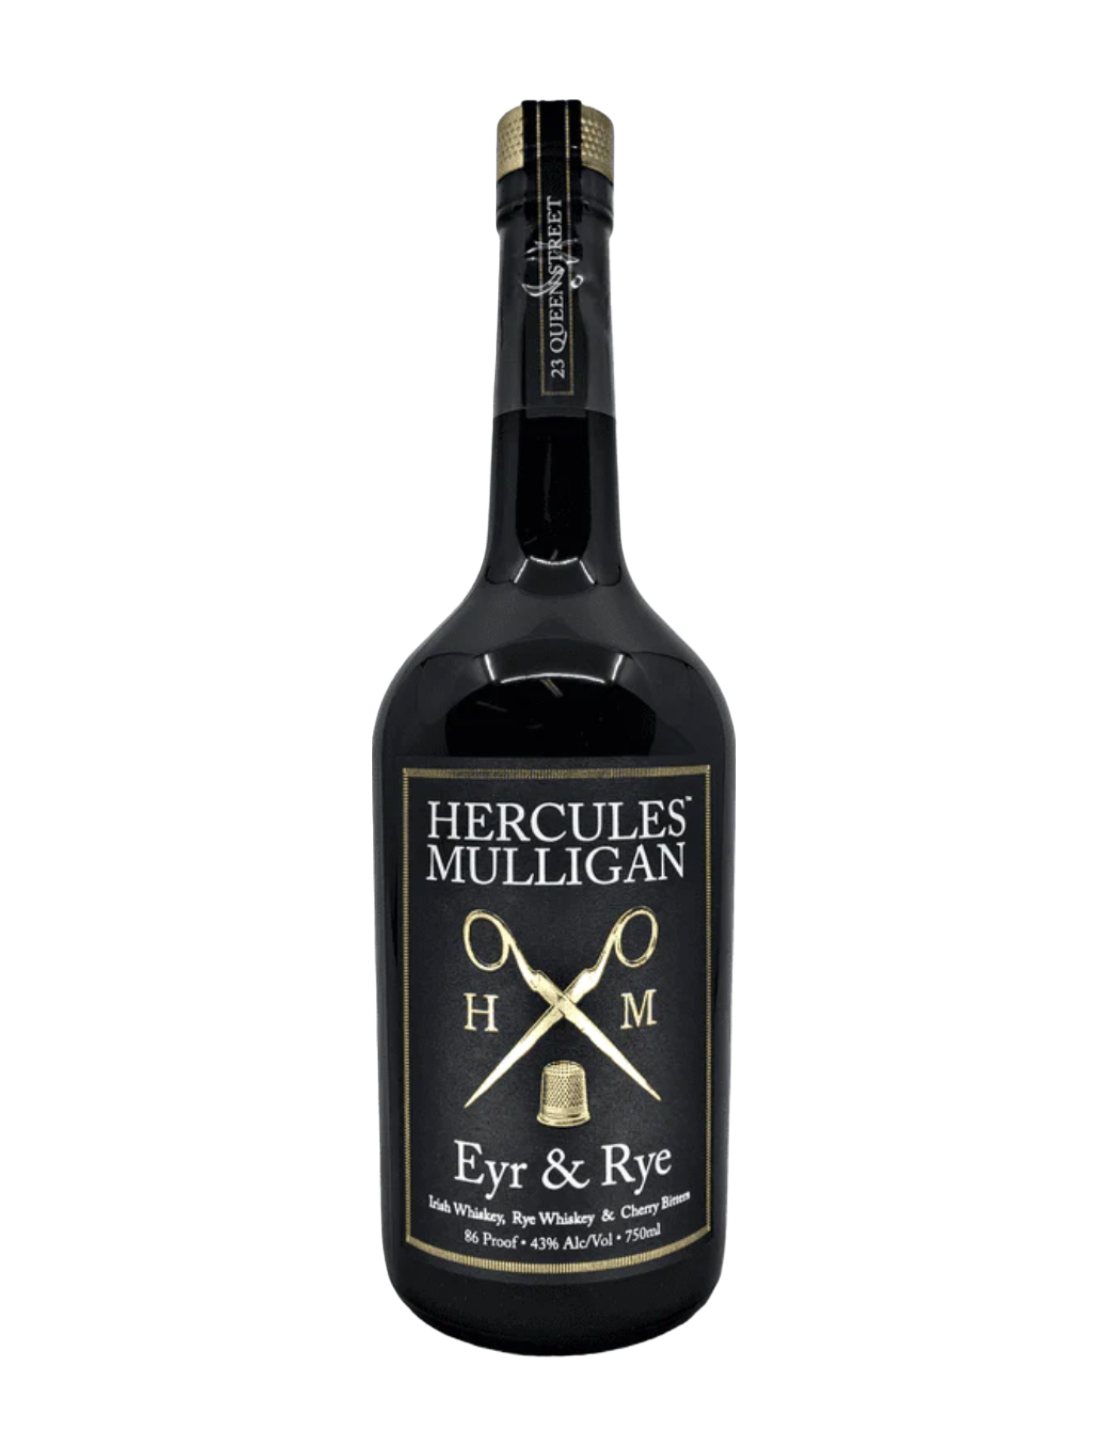 Elegant Black Bottle of Hercules Mulligan Eyr & Rye in front of a plain white background.